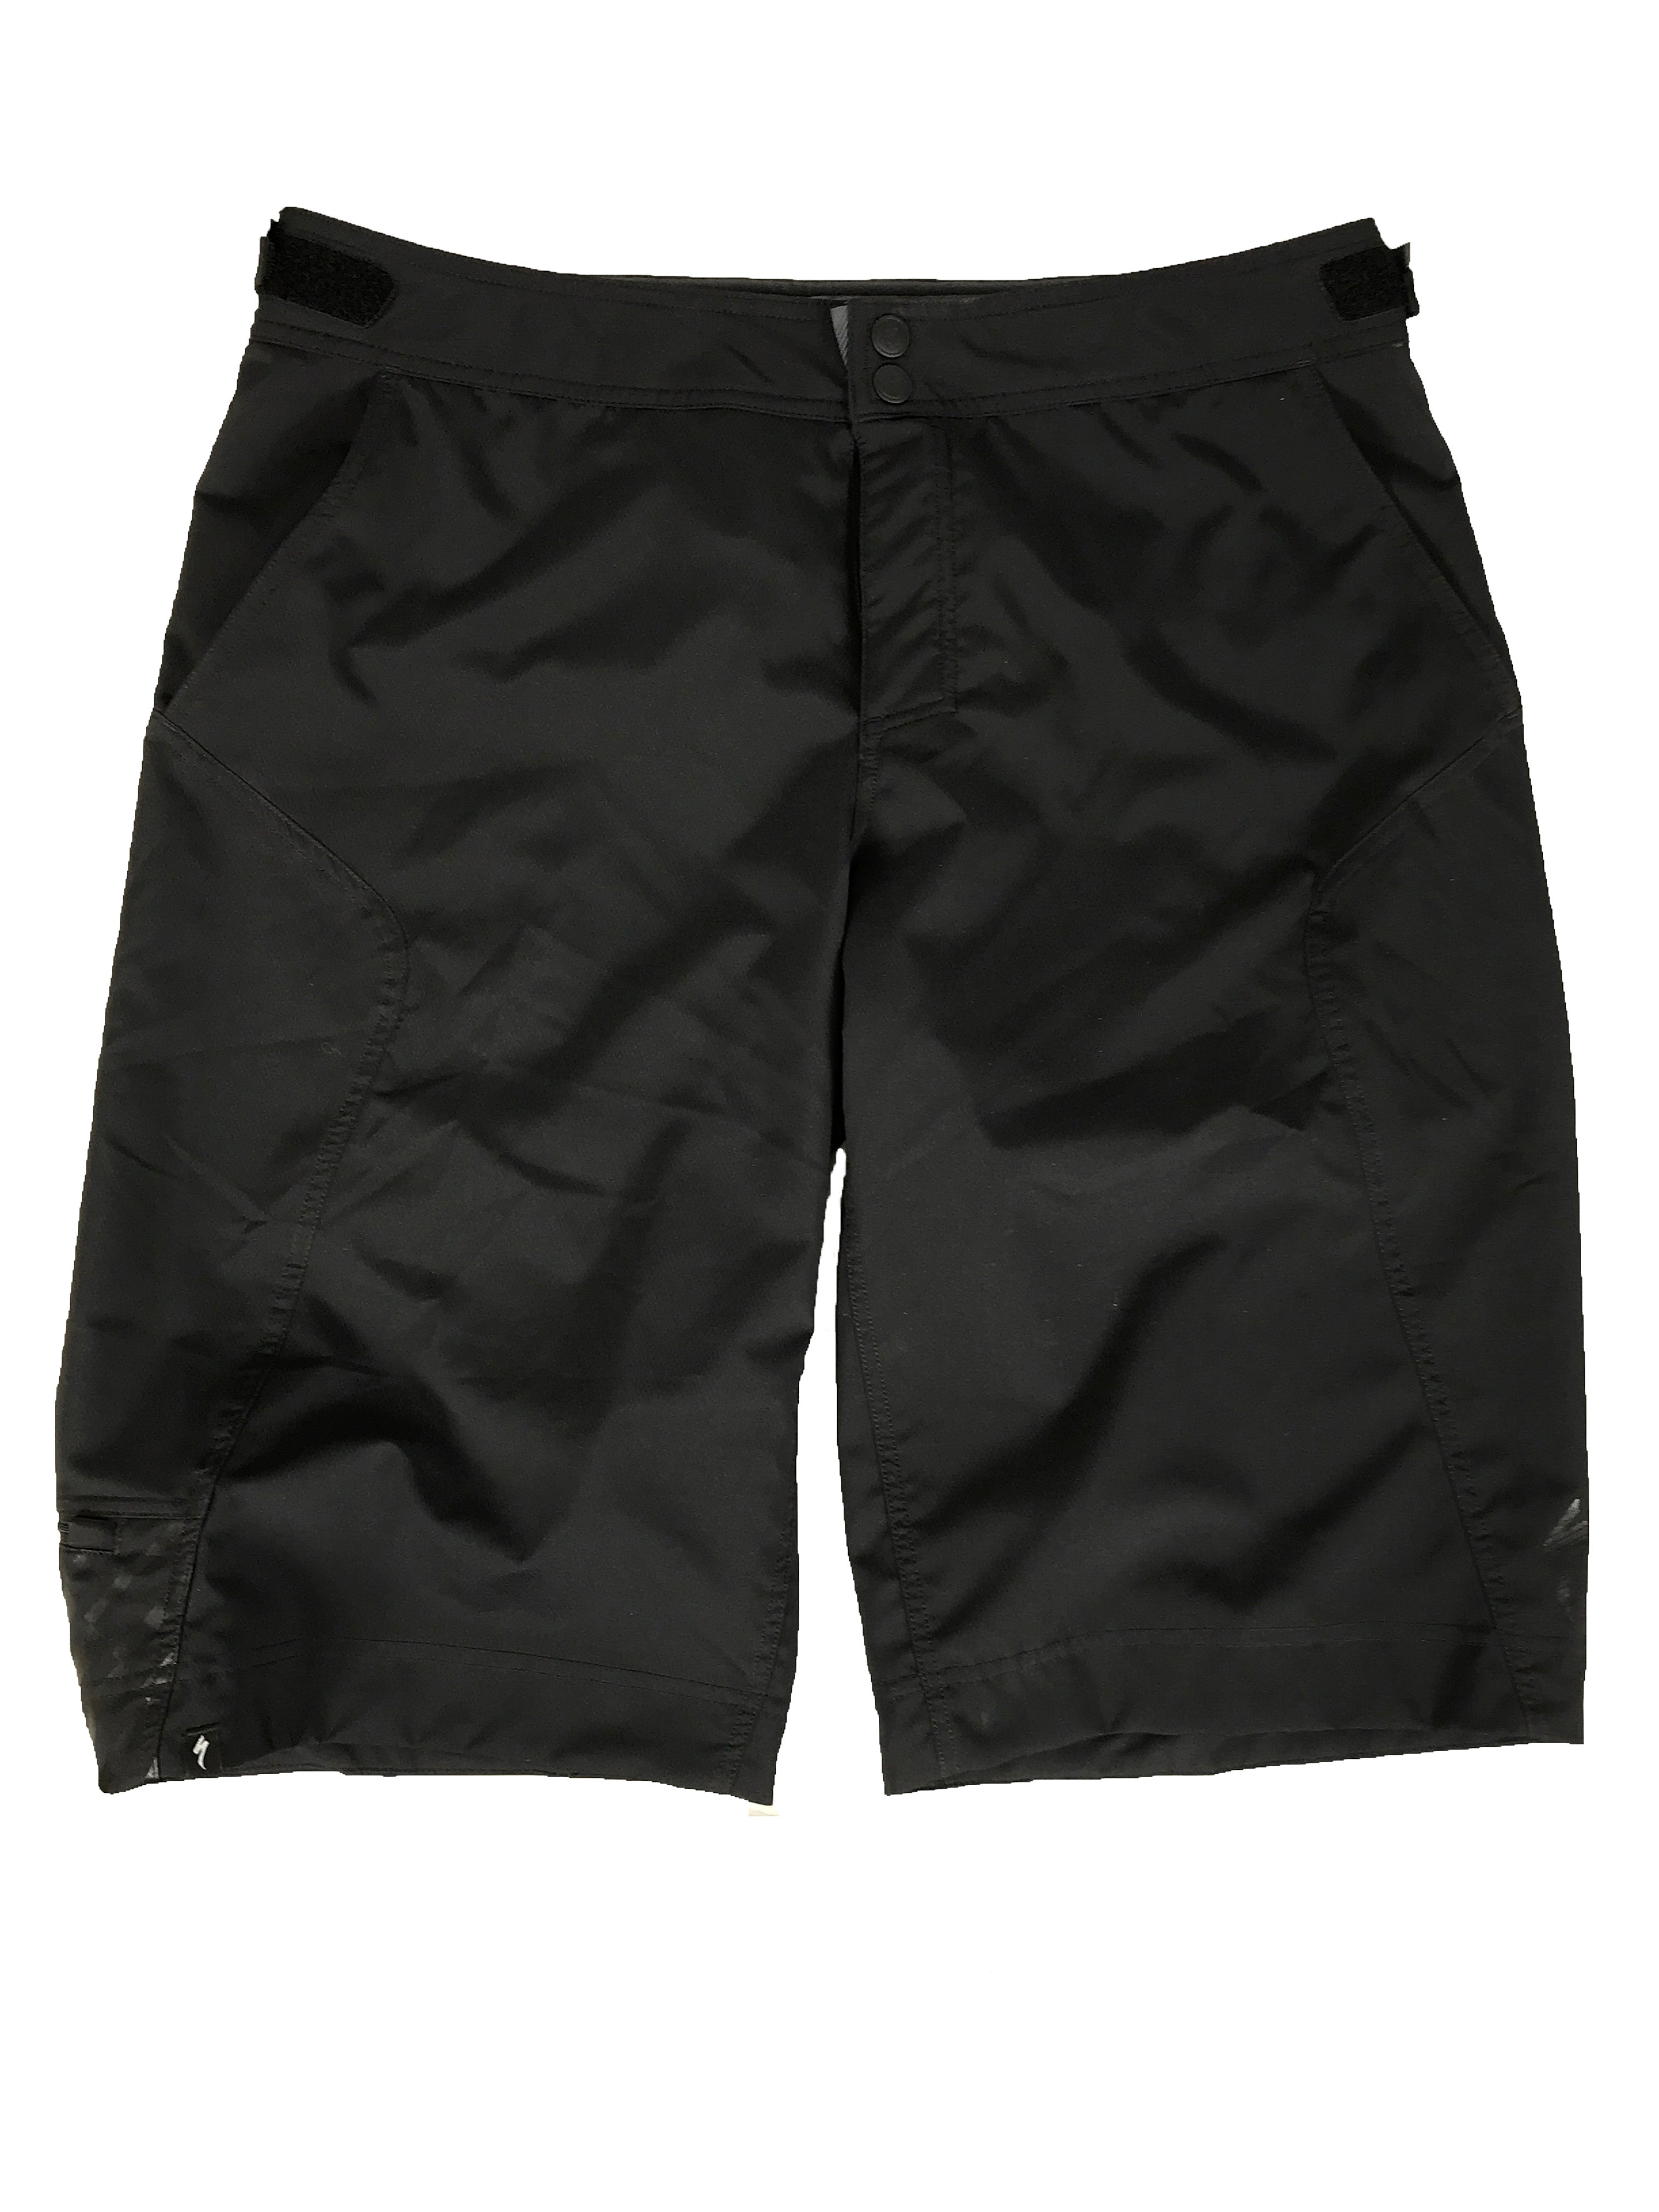 Specialized Enduro Comp Black Shorts Men's Size 38 NWT